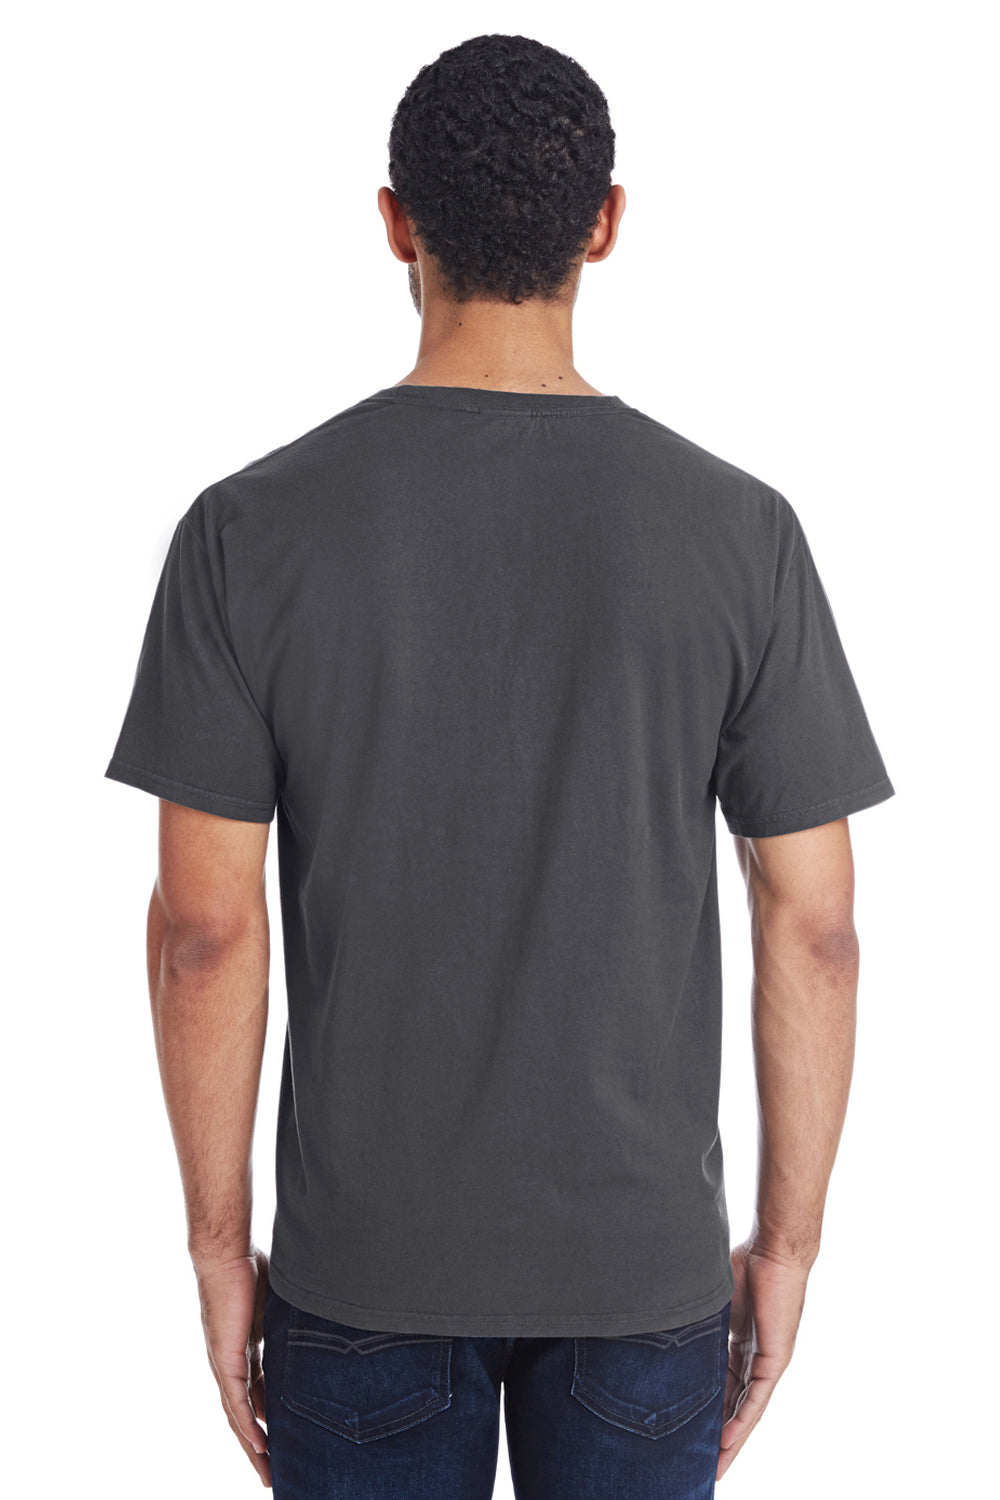 ComfortWash By Hanes GDH100 Mens Short Sleeve Crewneck T-Shirt Railroad Grey Back